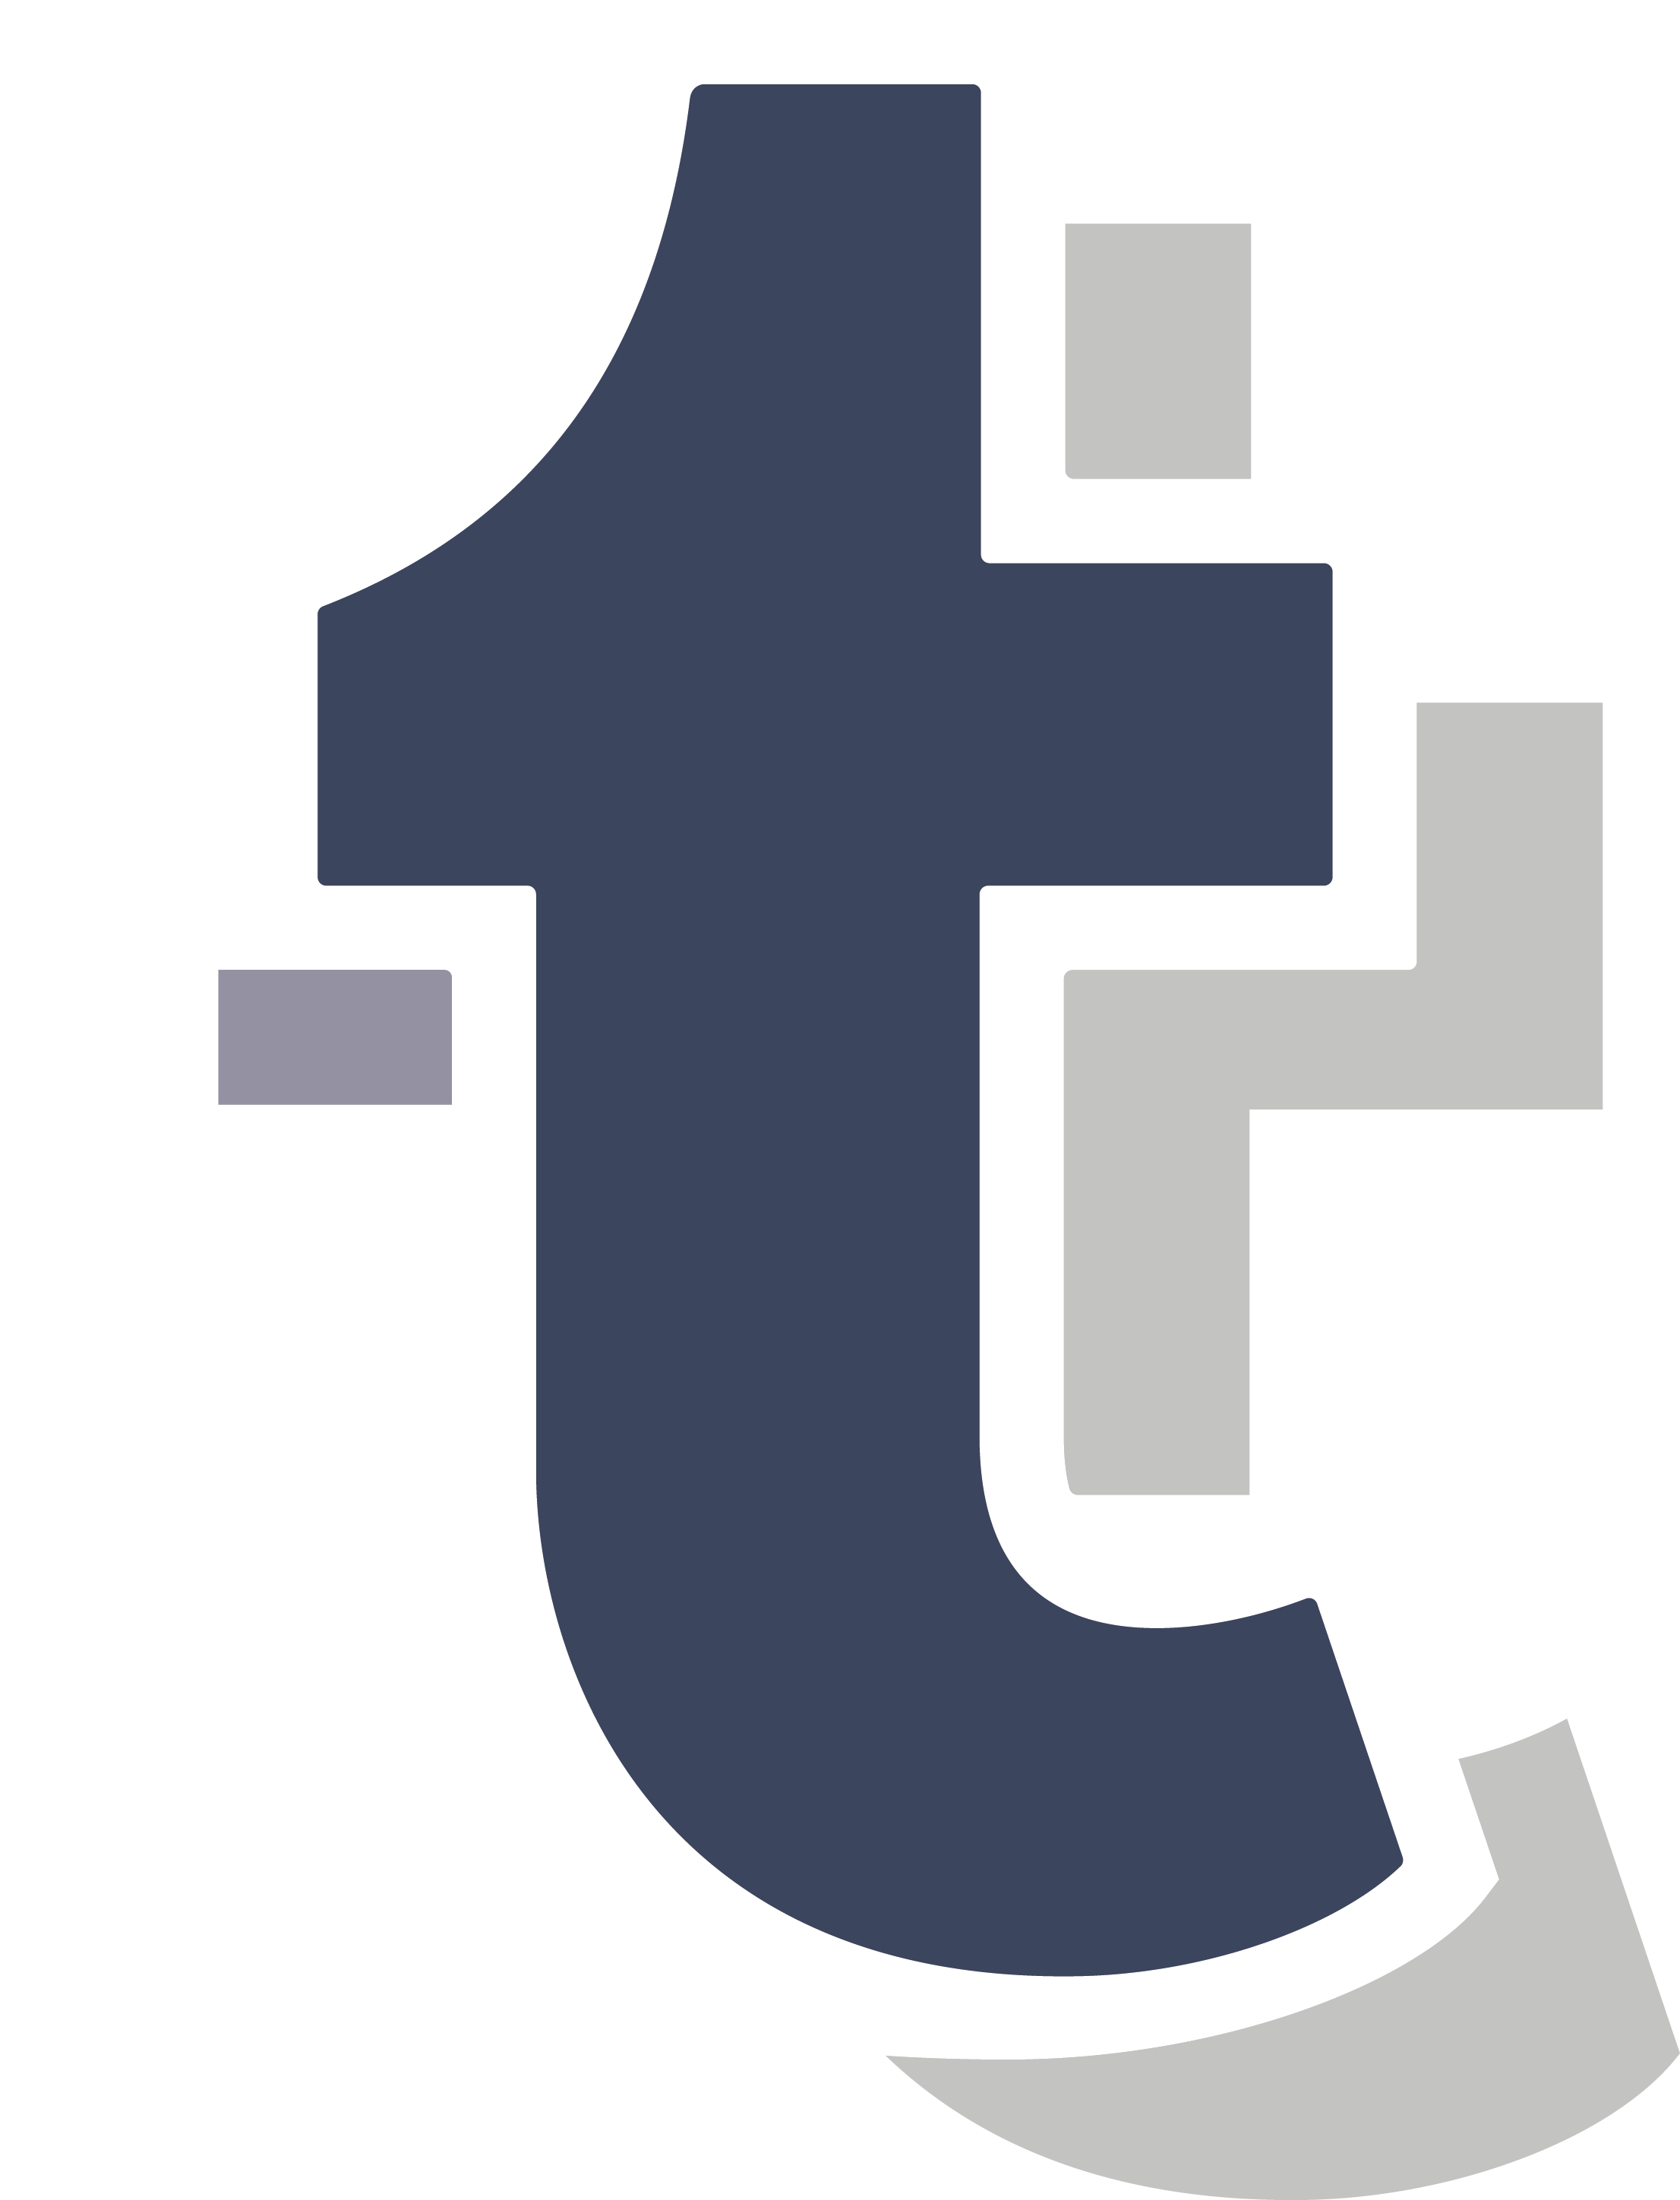 tumblr logo 1